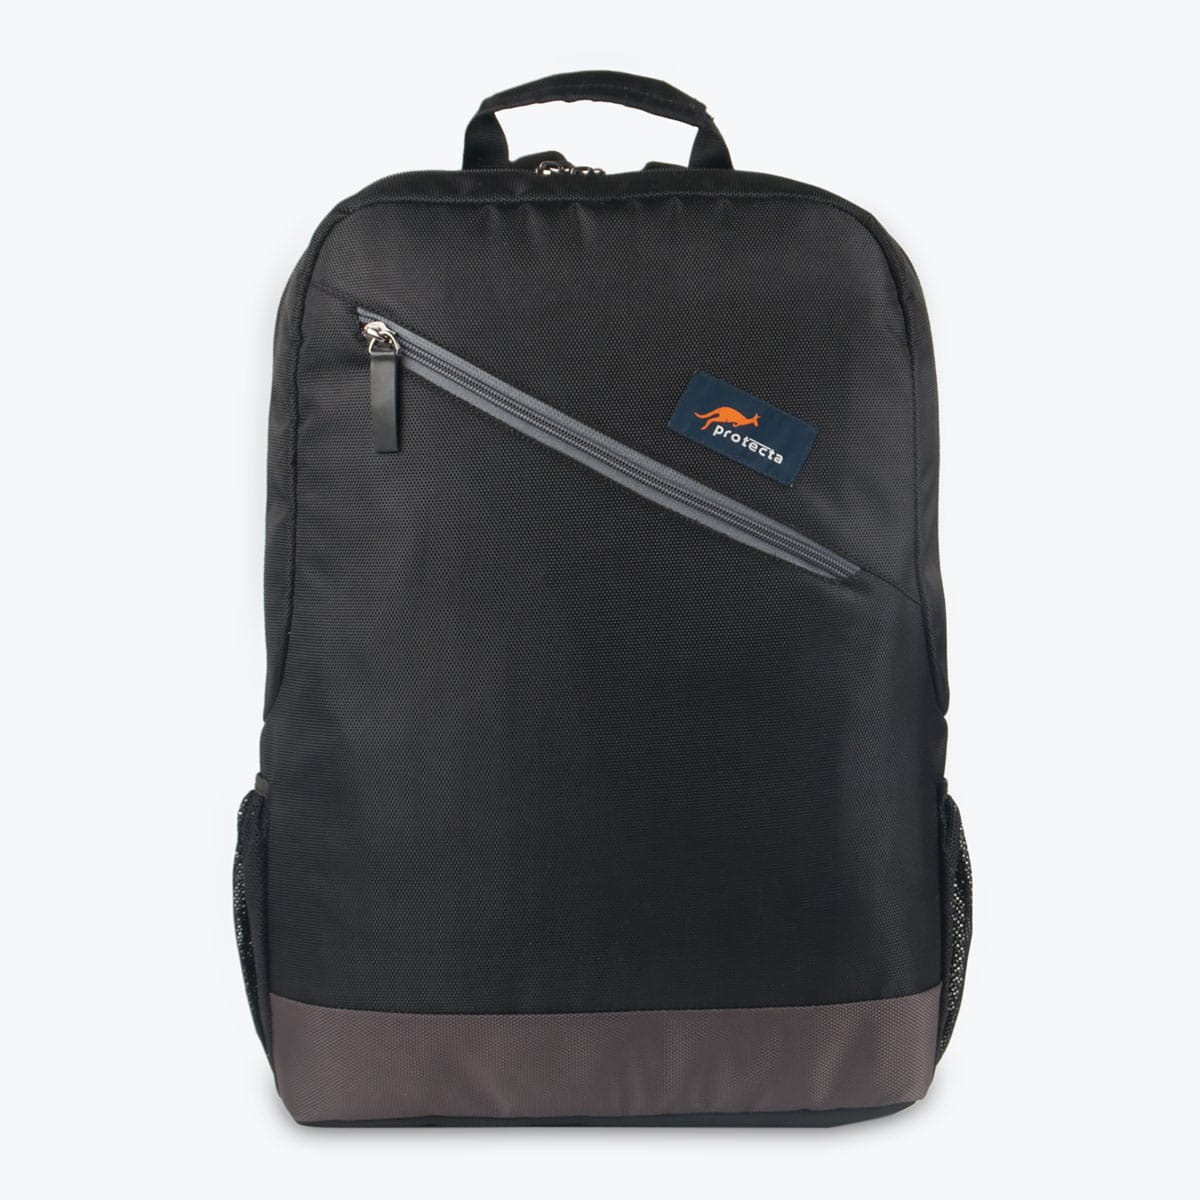 Black-Grey | Protecta Strong Suspicion Laptop Backpack-1